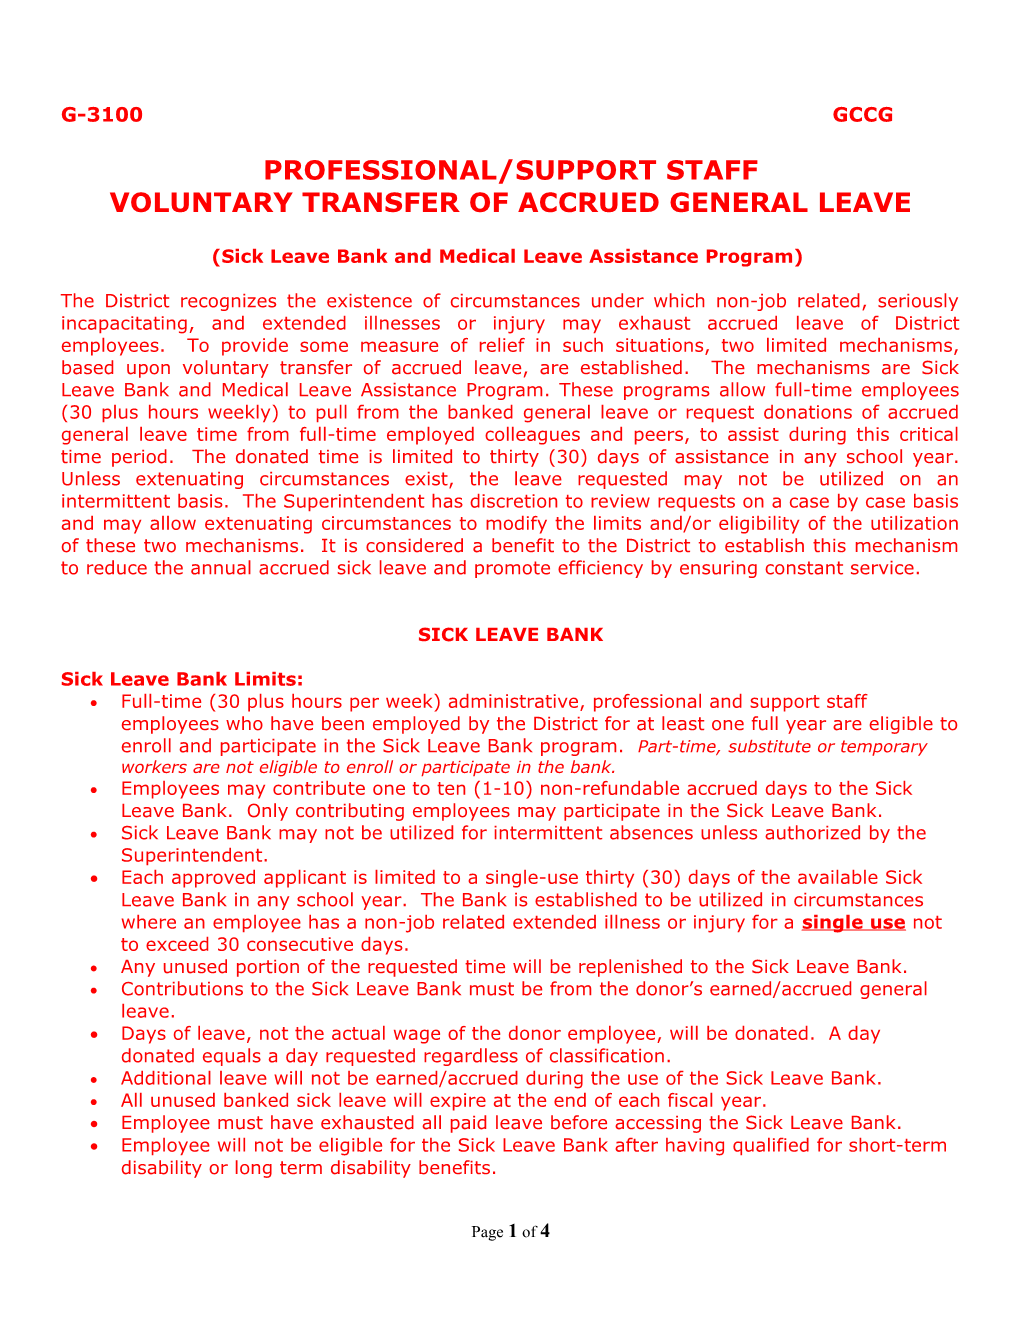 Voluntary Transfer of Accrued General Leave